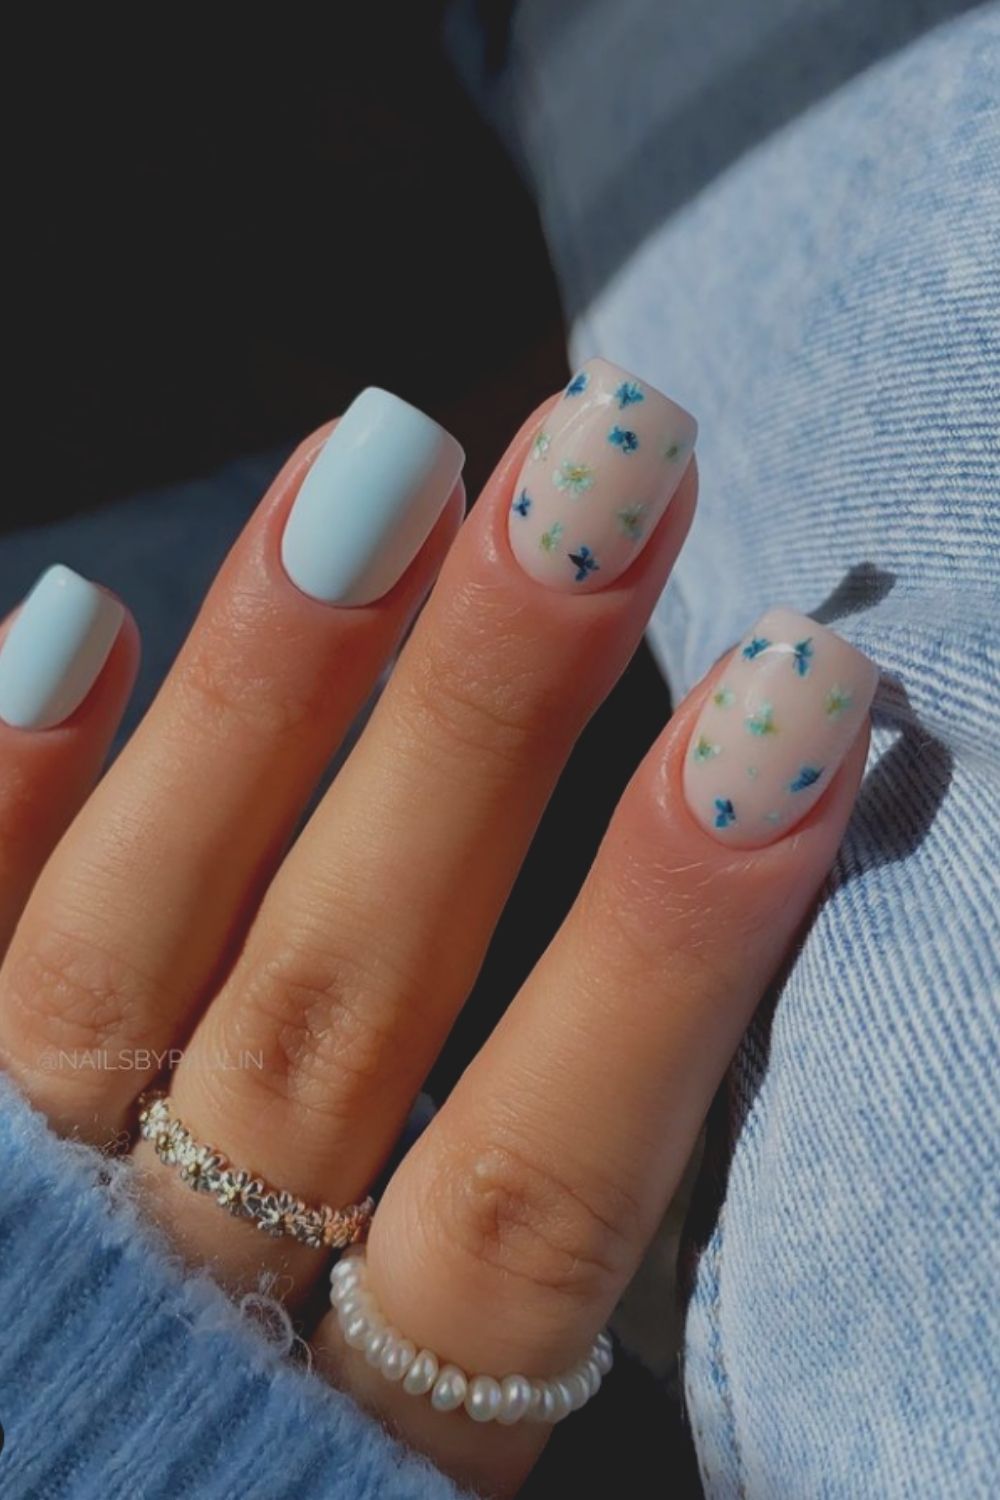 Light blue nails